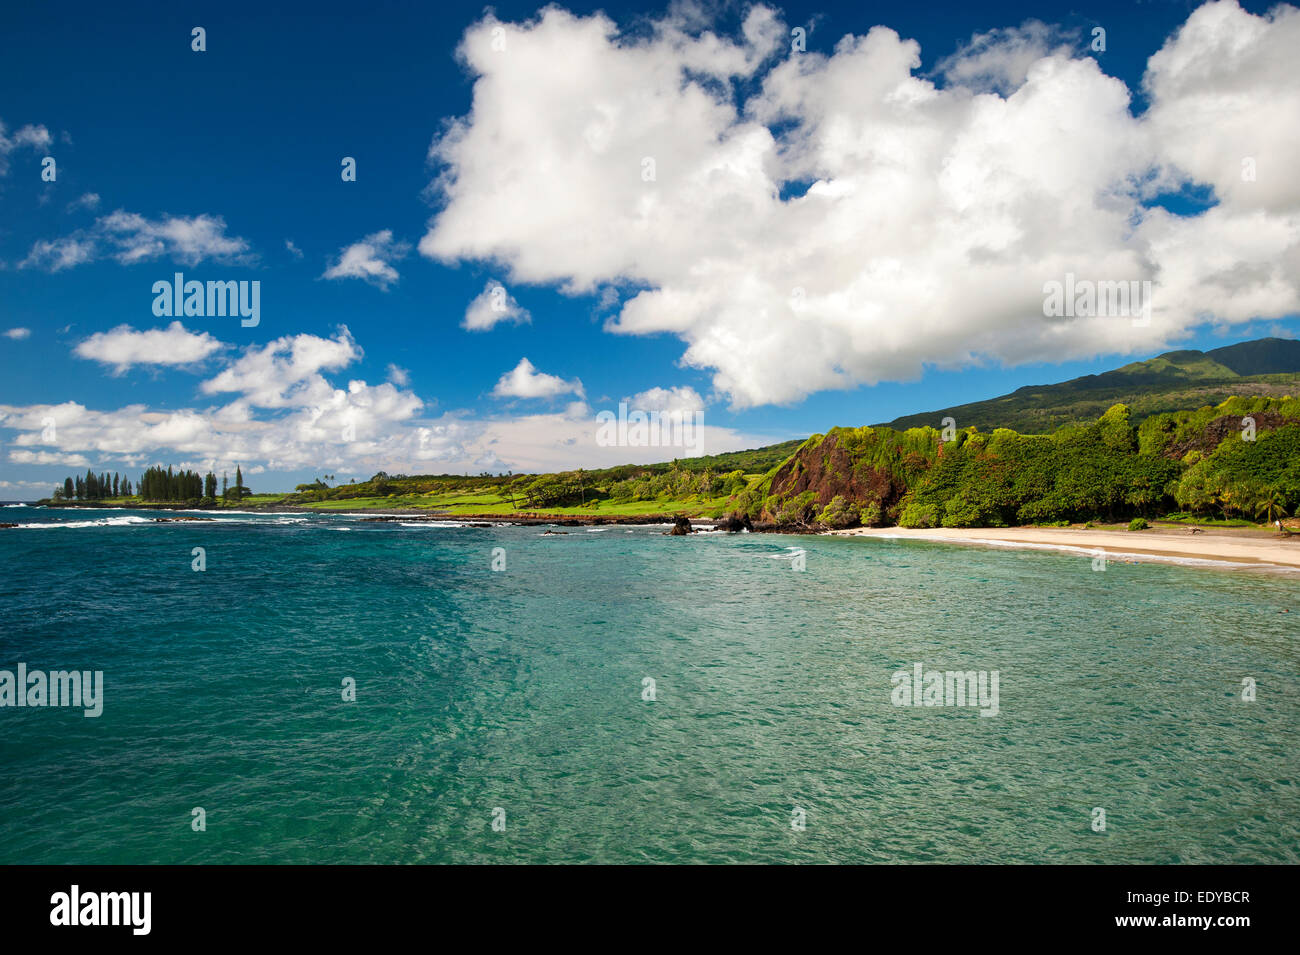 Hamoa beach, Maui Stock Photo